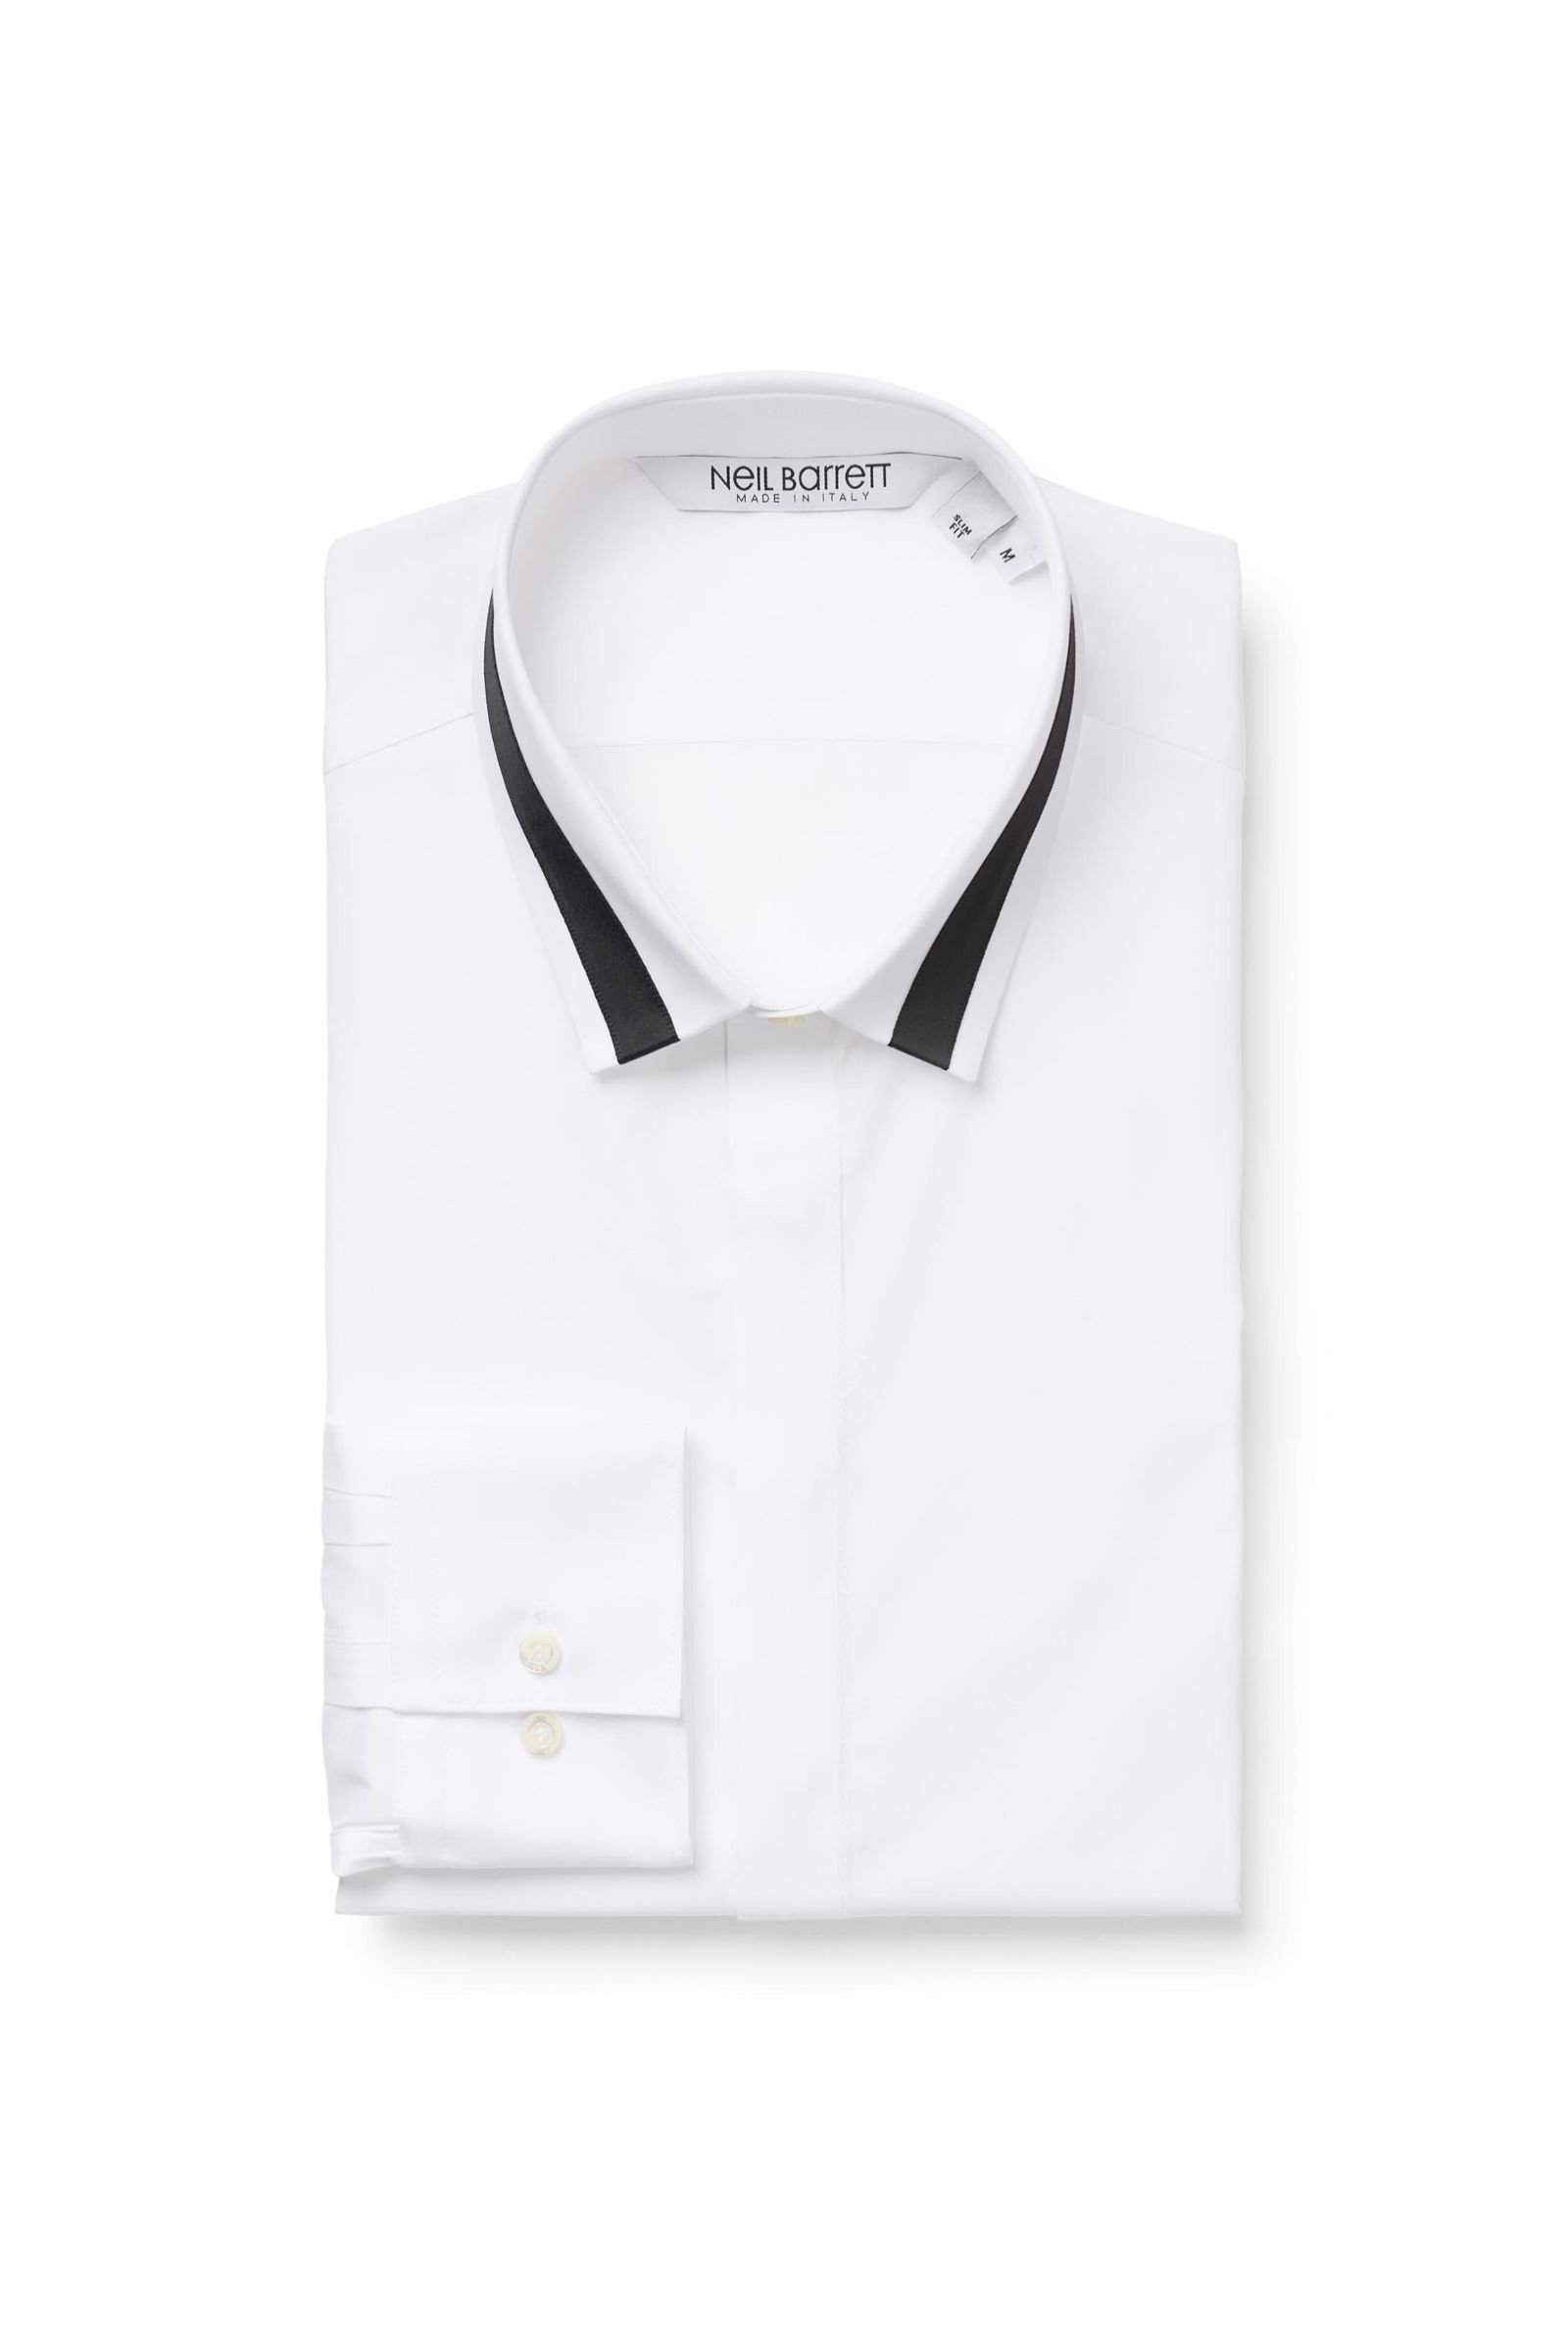 Tuxedo shirt narrow collar white